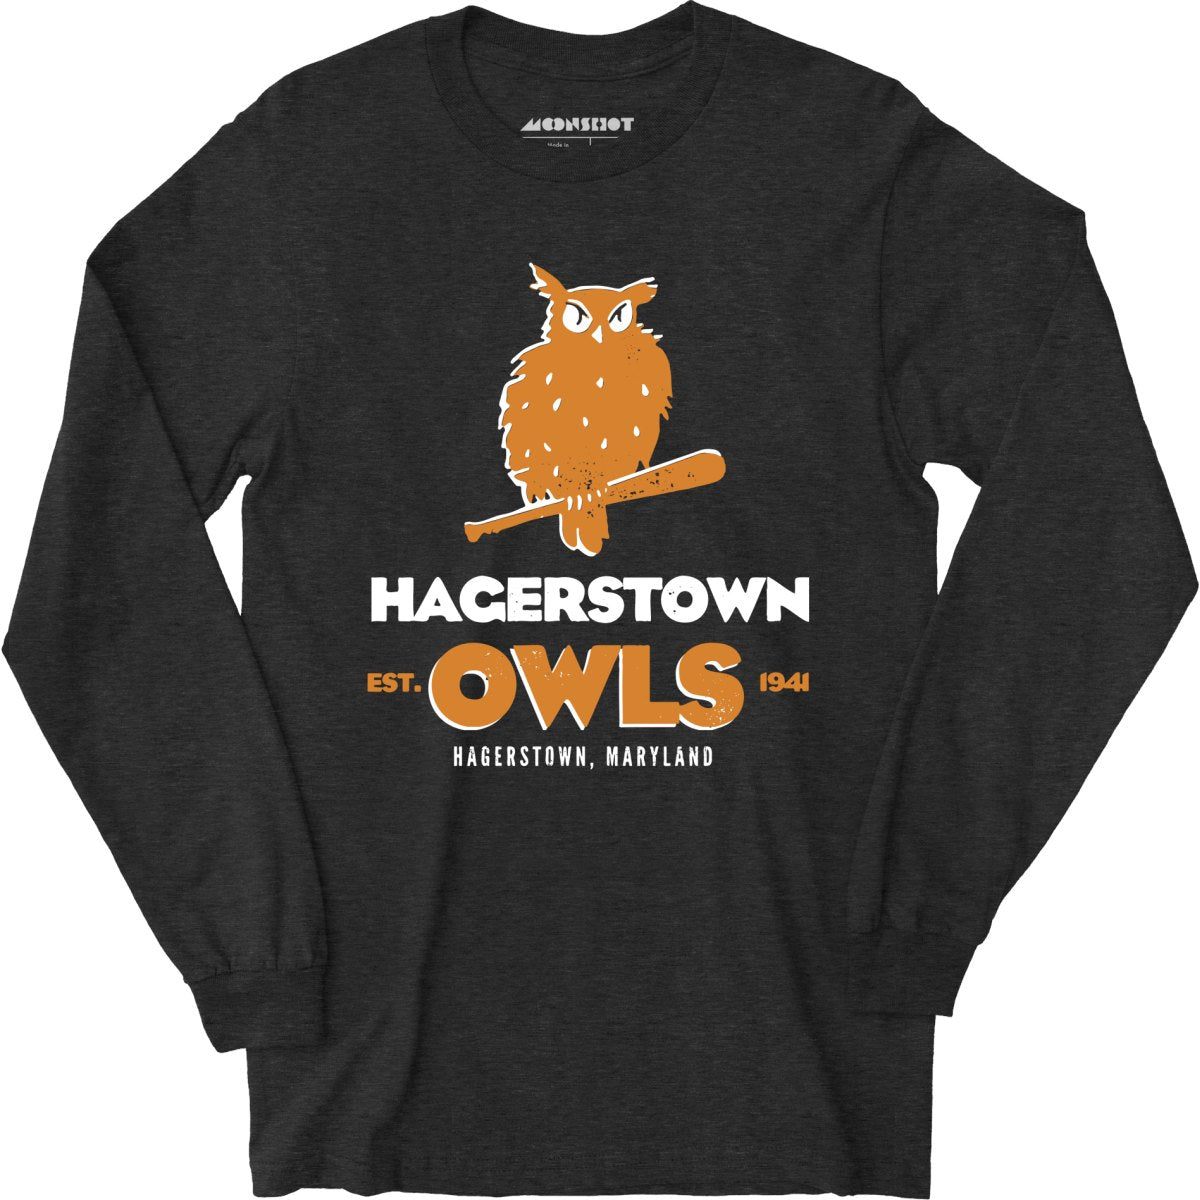 Hagerstown Owls - Maryland - Vintage Defunct Baseball Teams - Long Sleeve T-Shirt